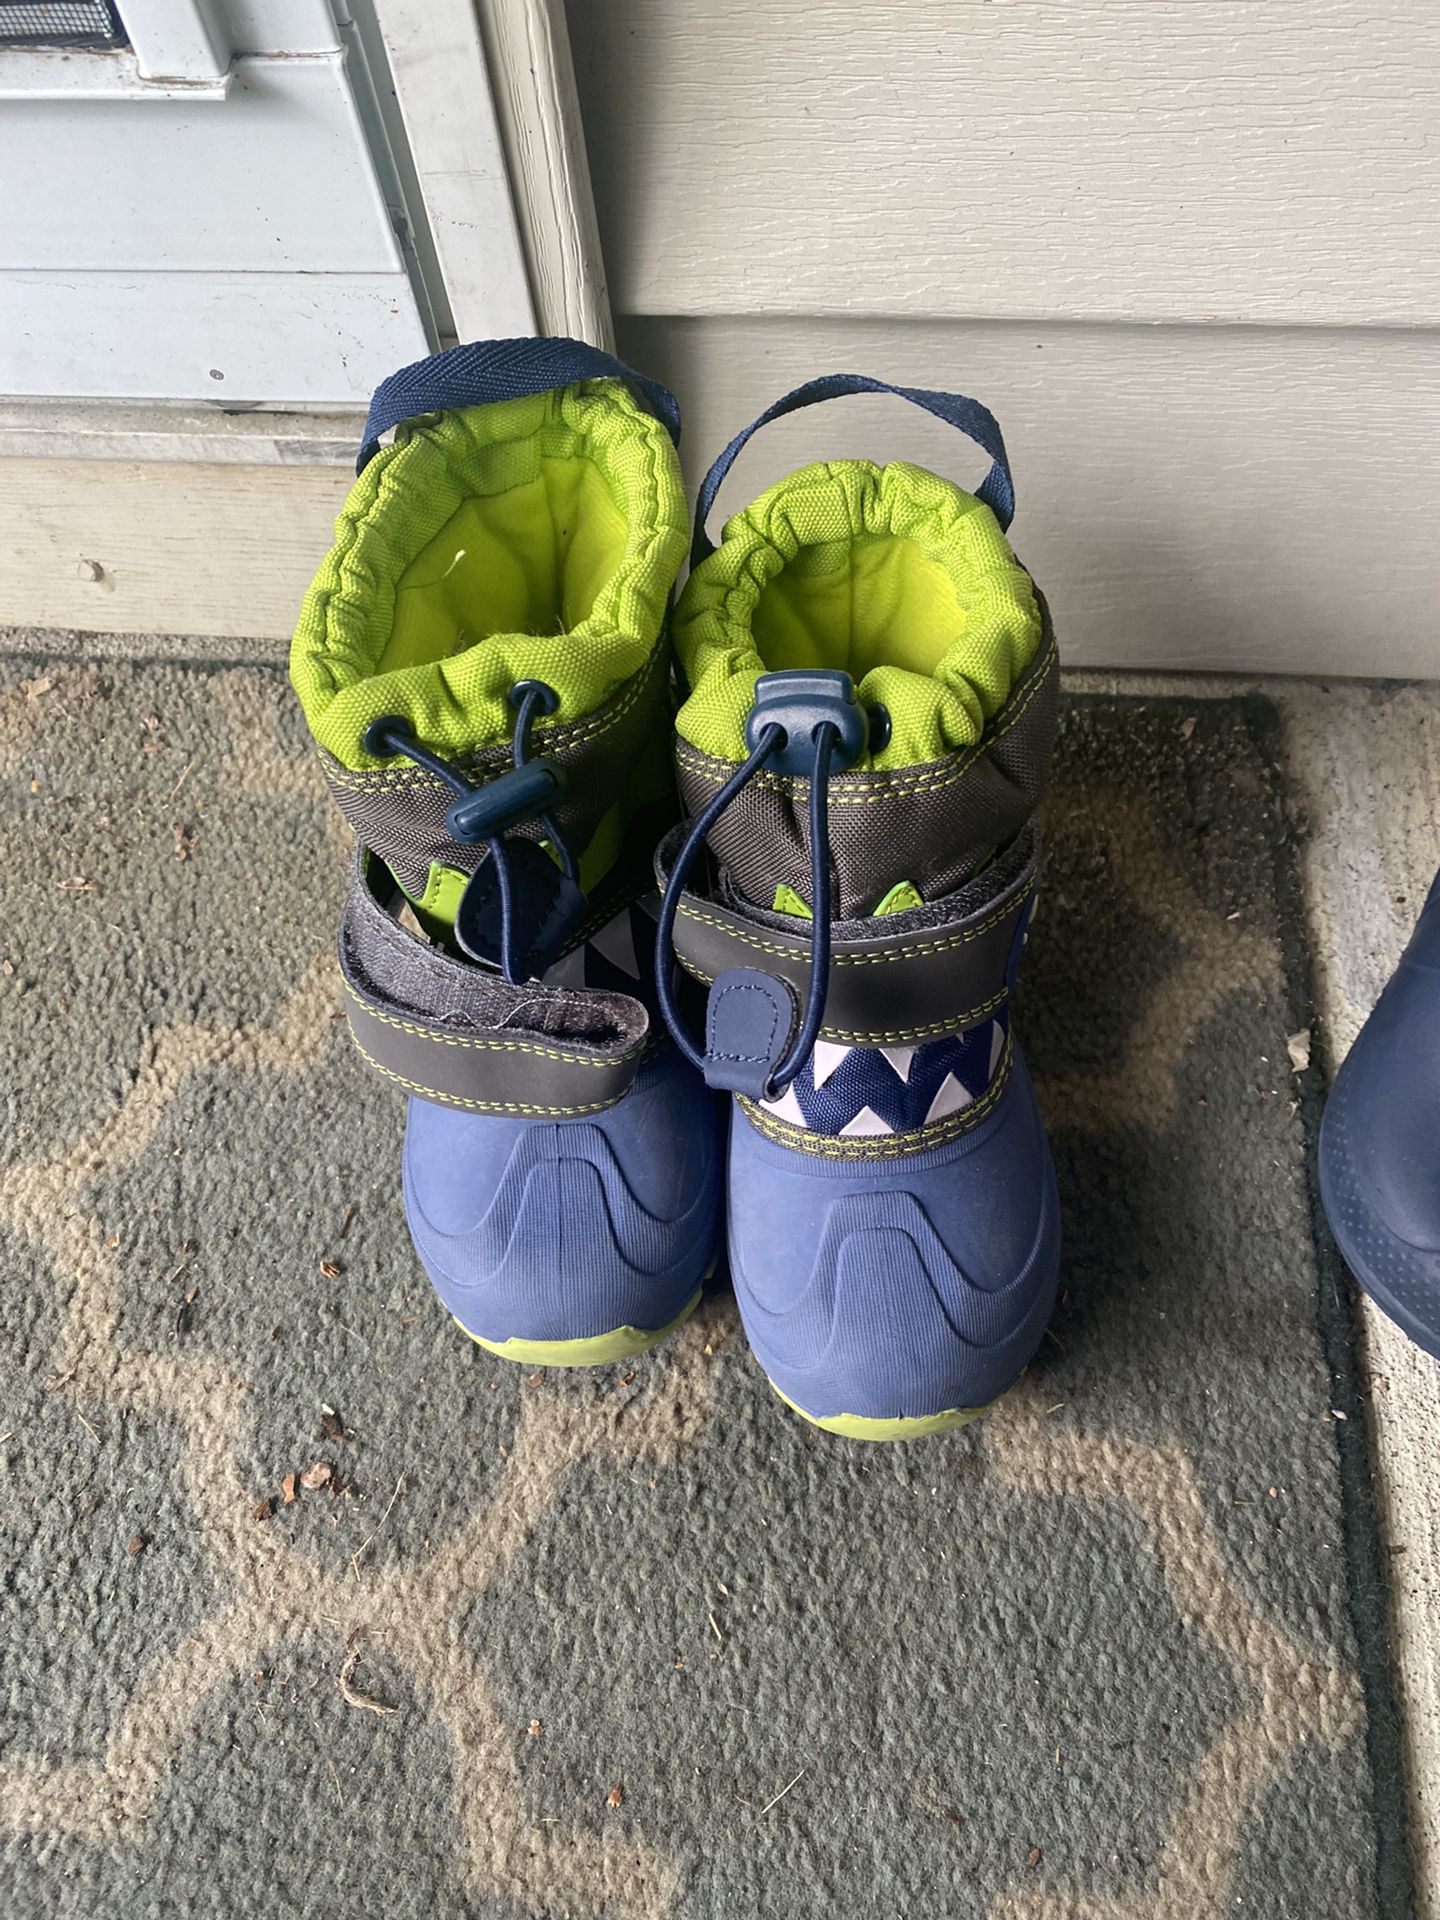 Pending Toddler Rain Boots